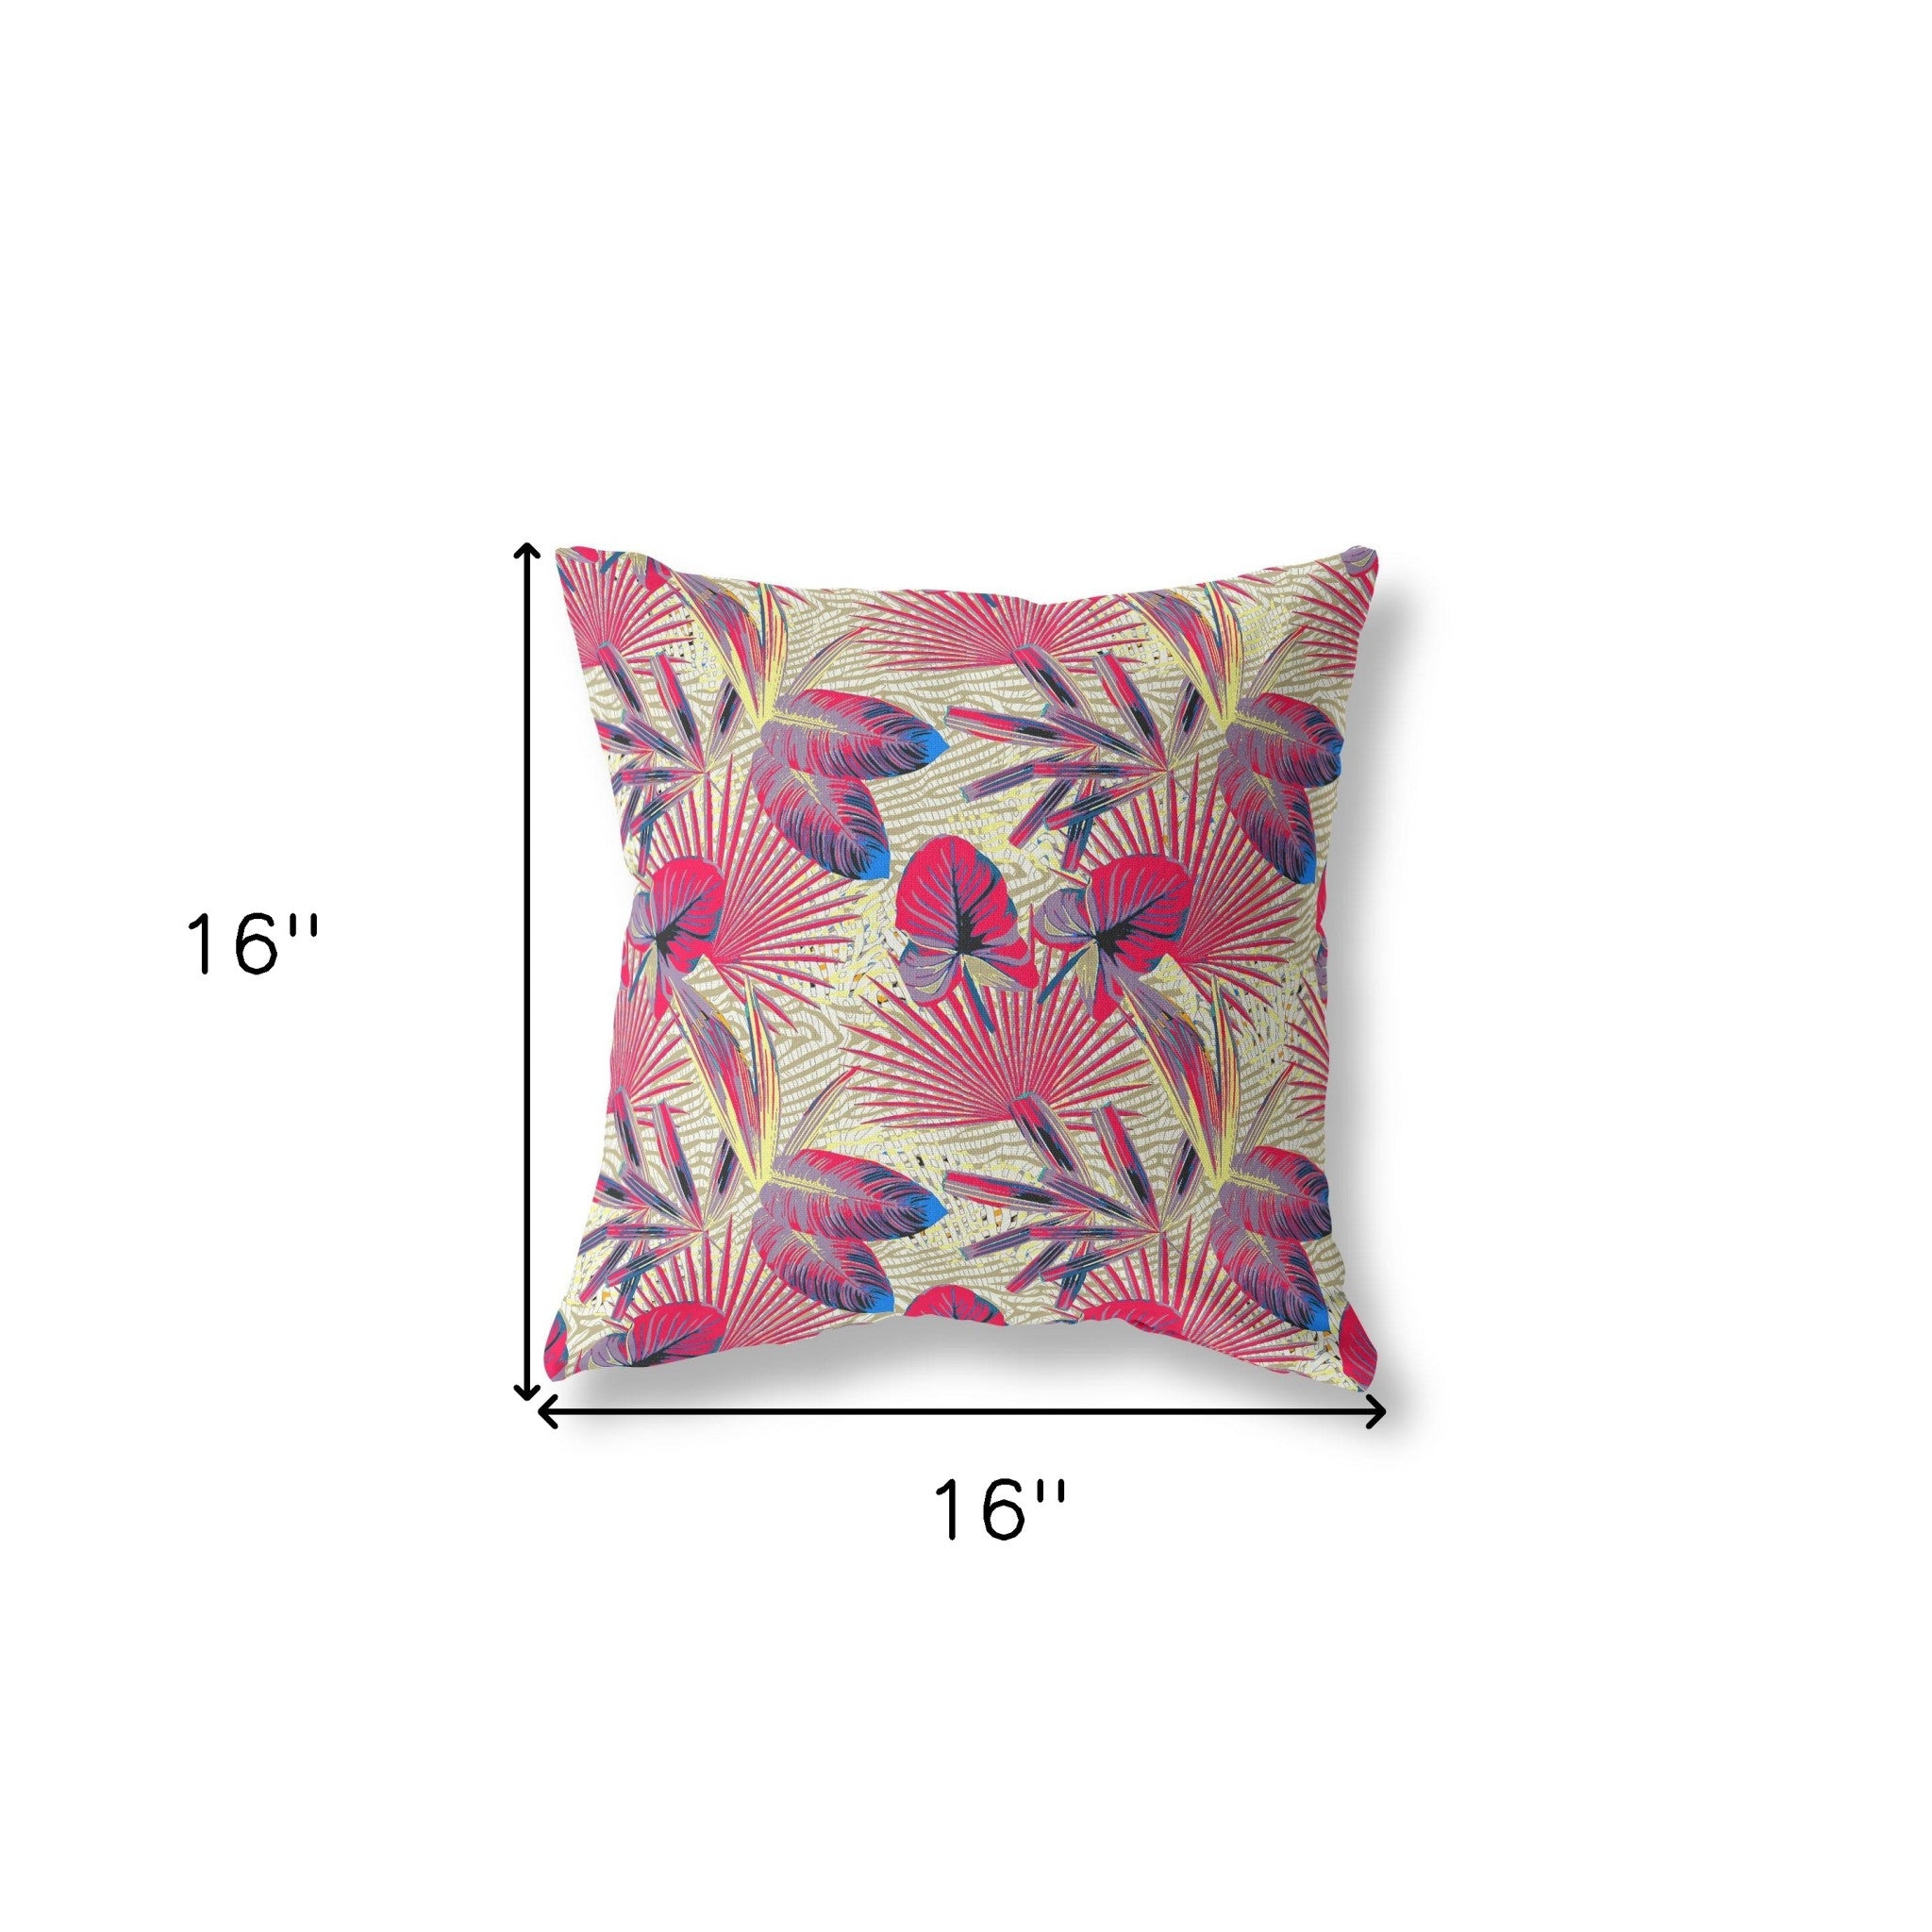 16” Pink Yellow Tropical Indoor Outdoor Throw Pillow